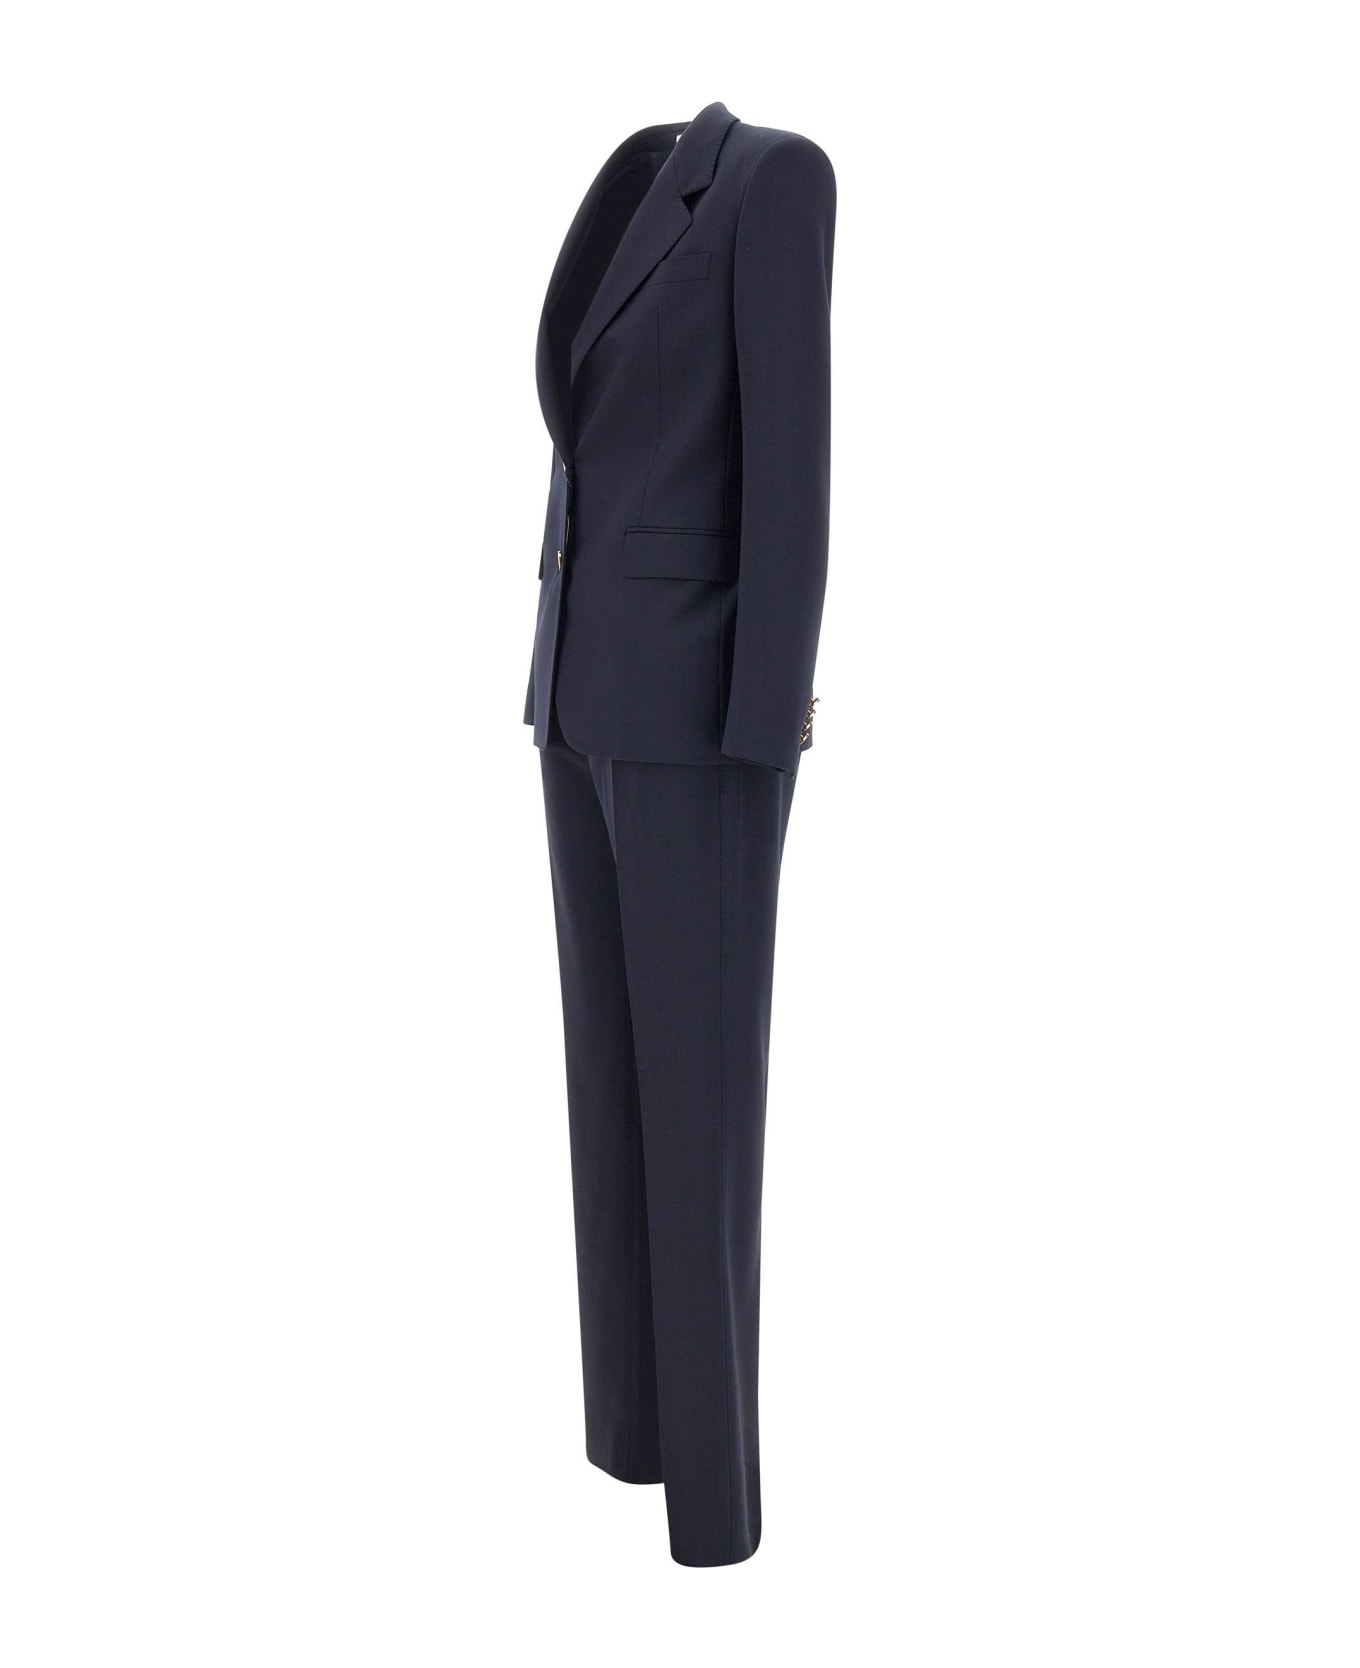 Tagliatore "parigi" Wool Two-piece Suit - BLUE スーツ